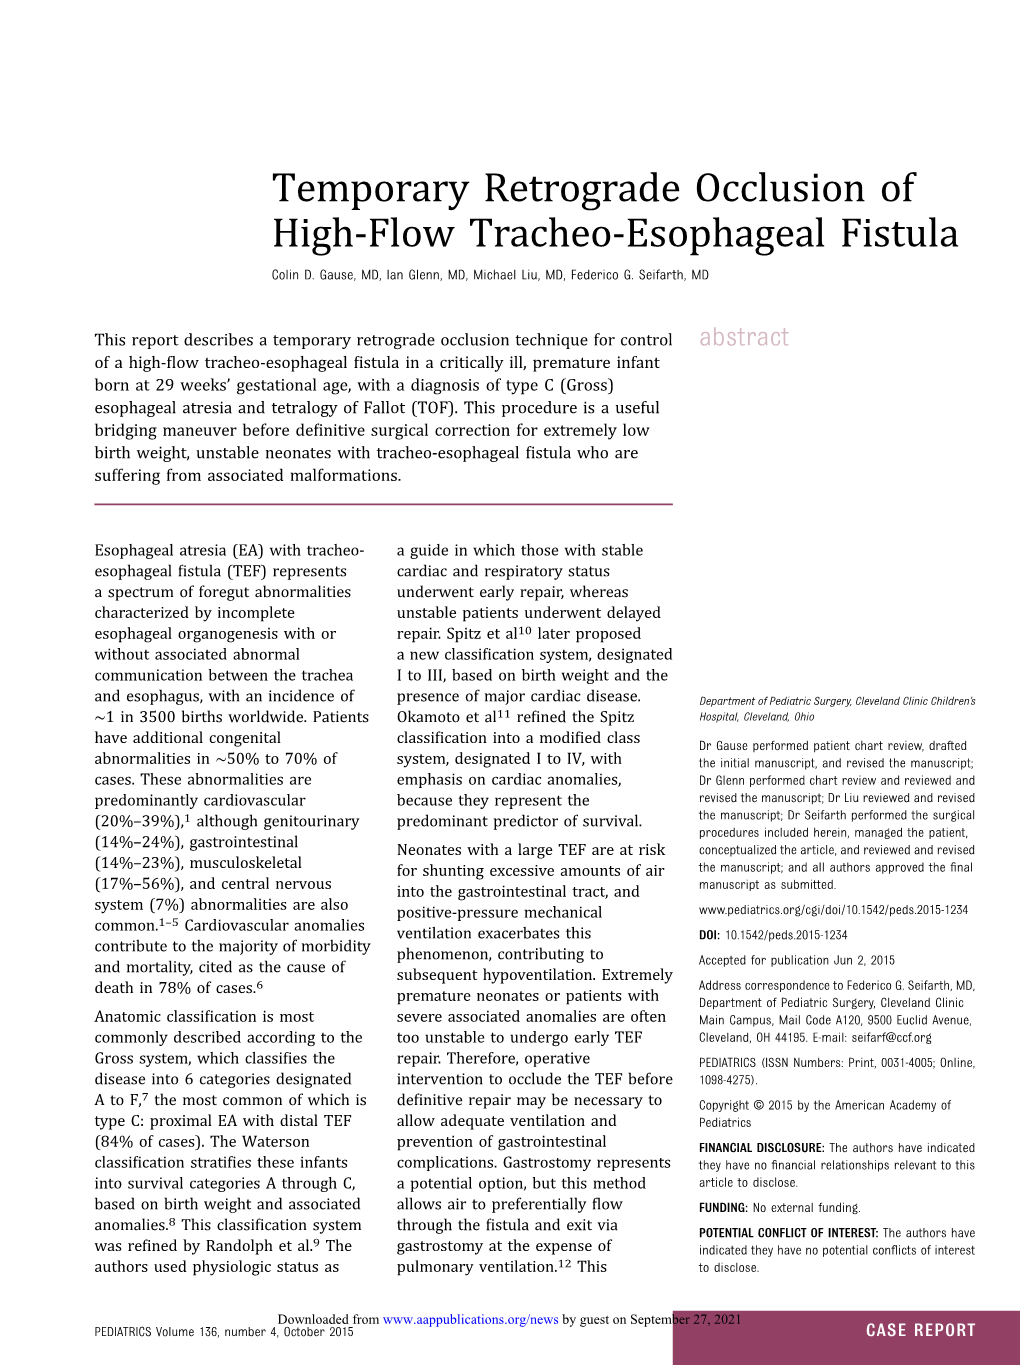 Temporary Retrograde Occlusion of High-Flow Tracheo-Esophageal Fistula Colin D